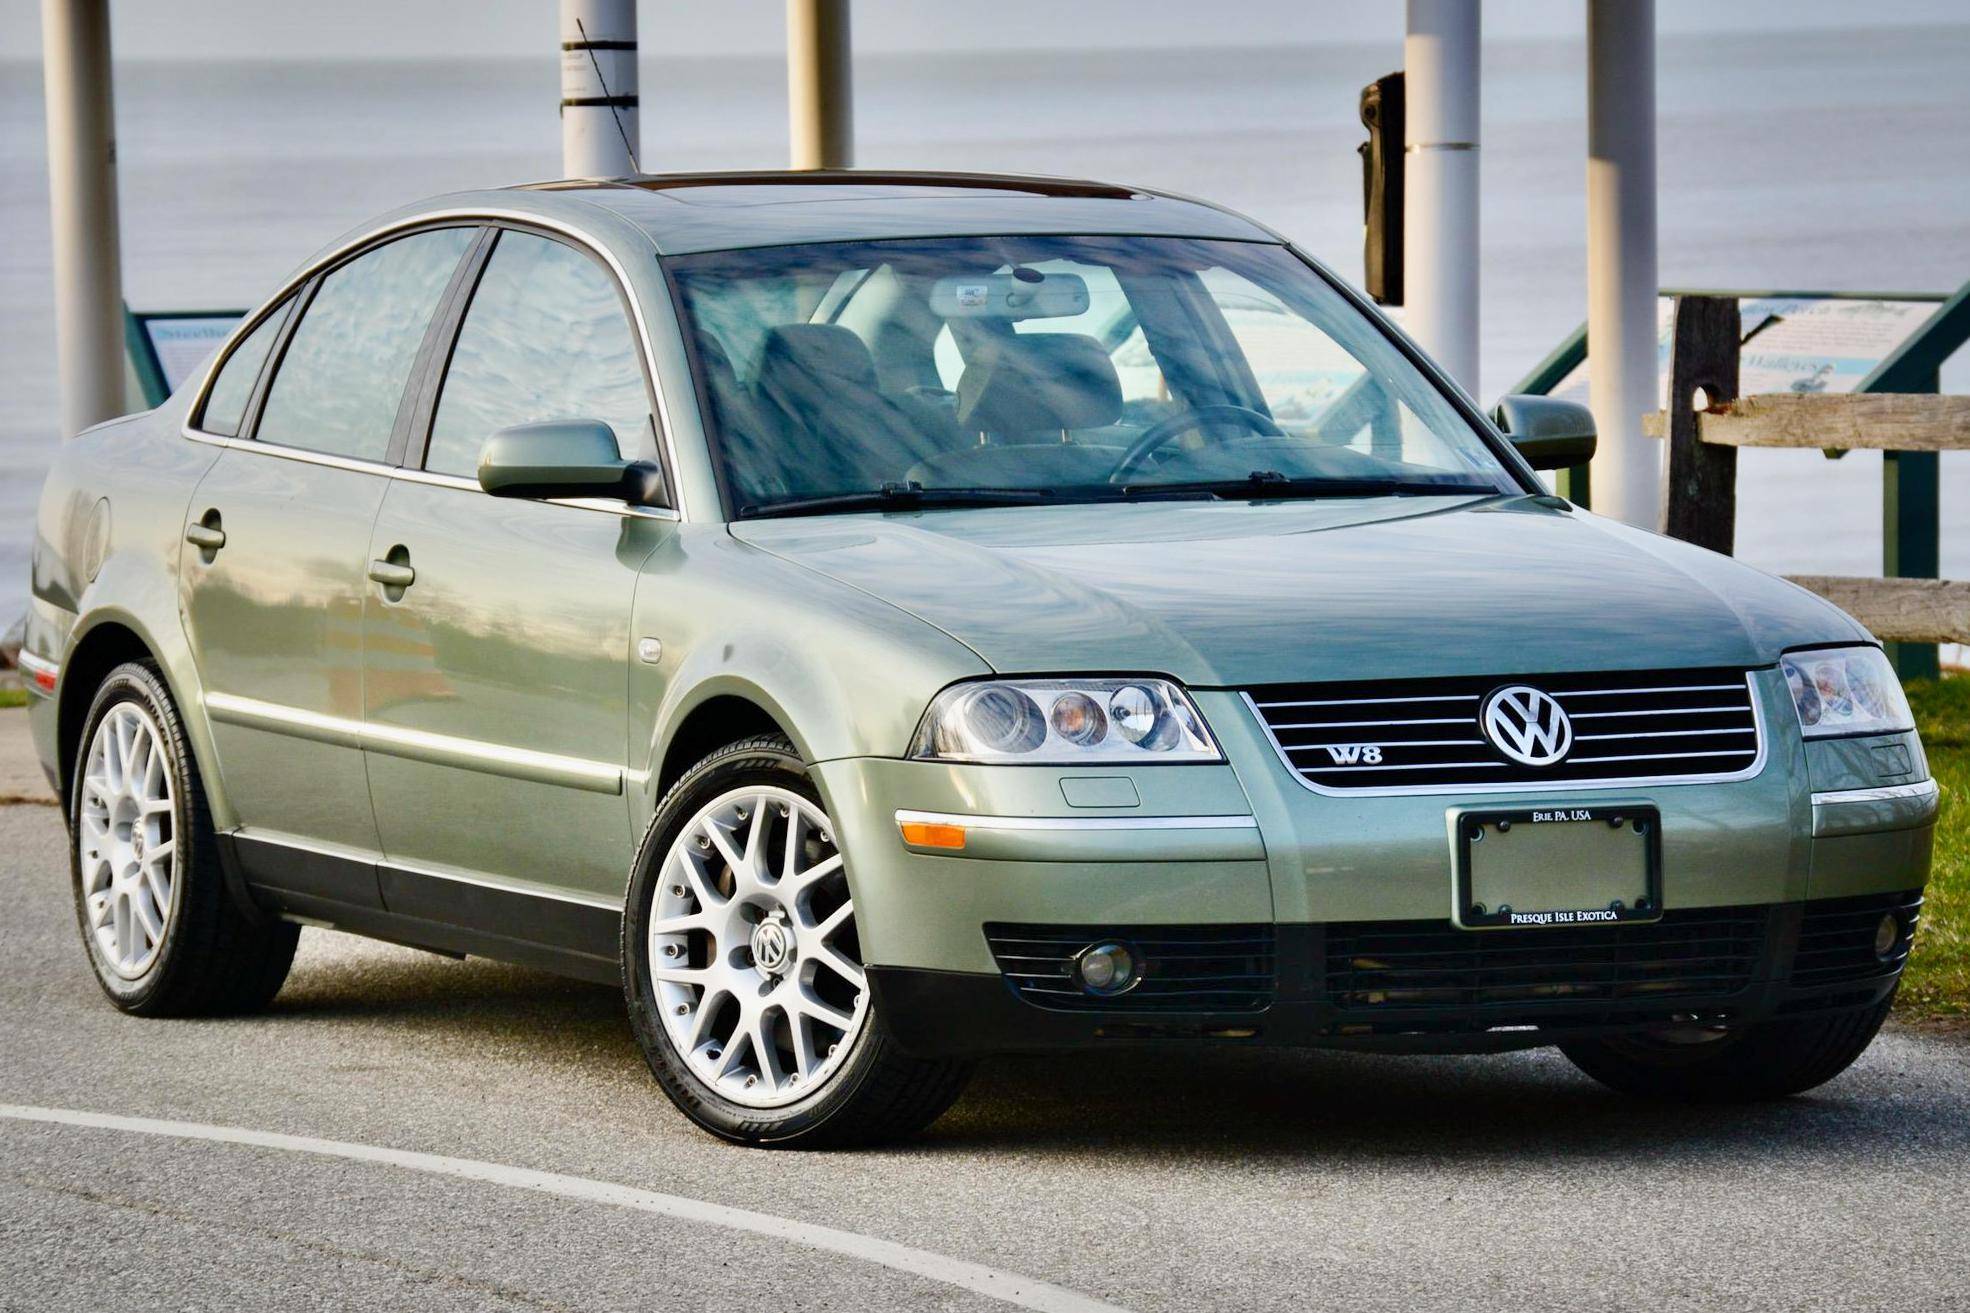 2003 Volkswagen Passat W8 Sedan auction - Cars & Bids